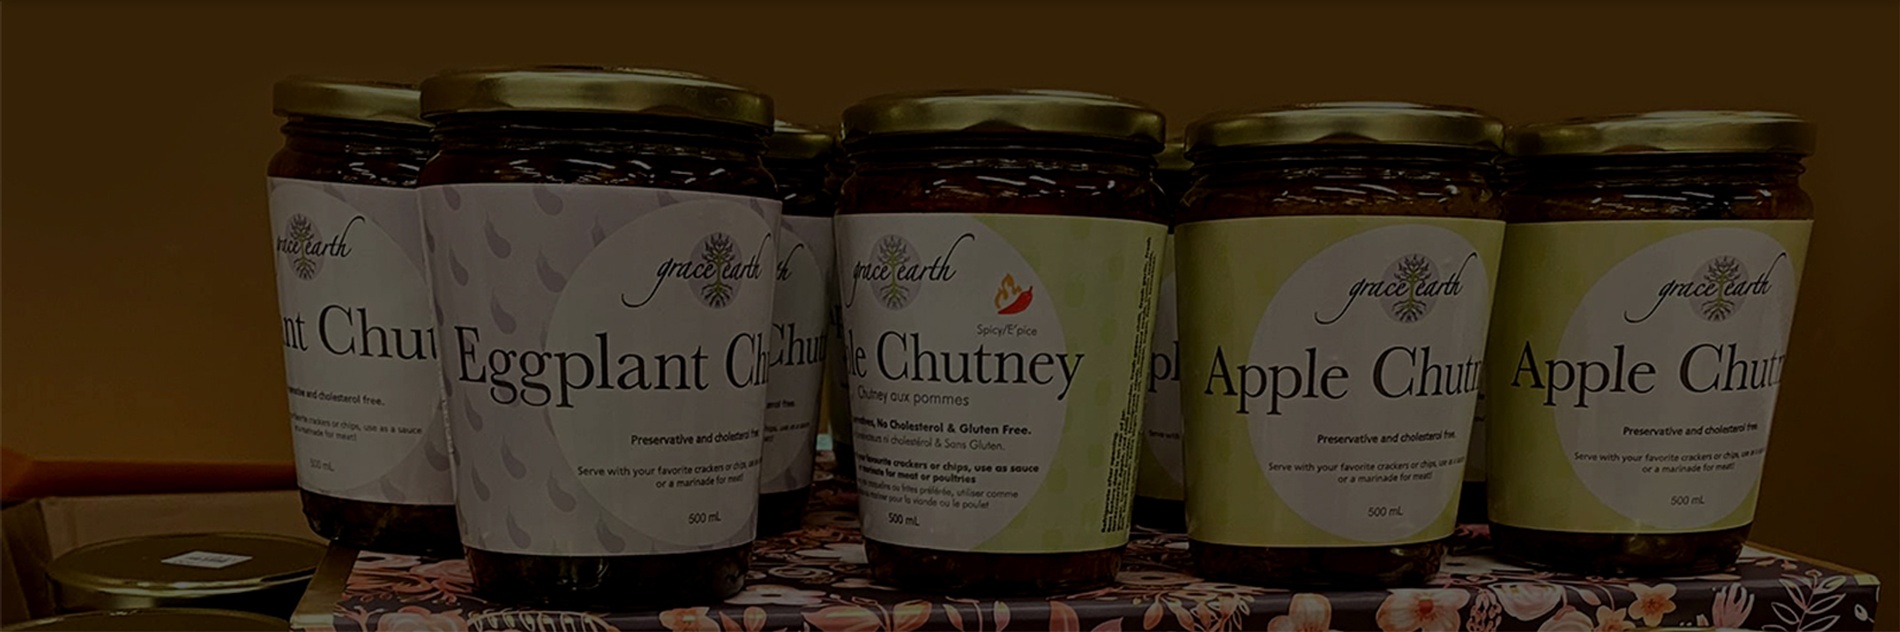 Edmonton Apple, Eggplant Chutney Store - Grace Earth Inc.